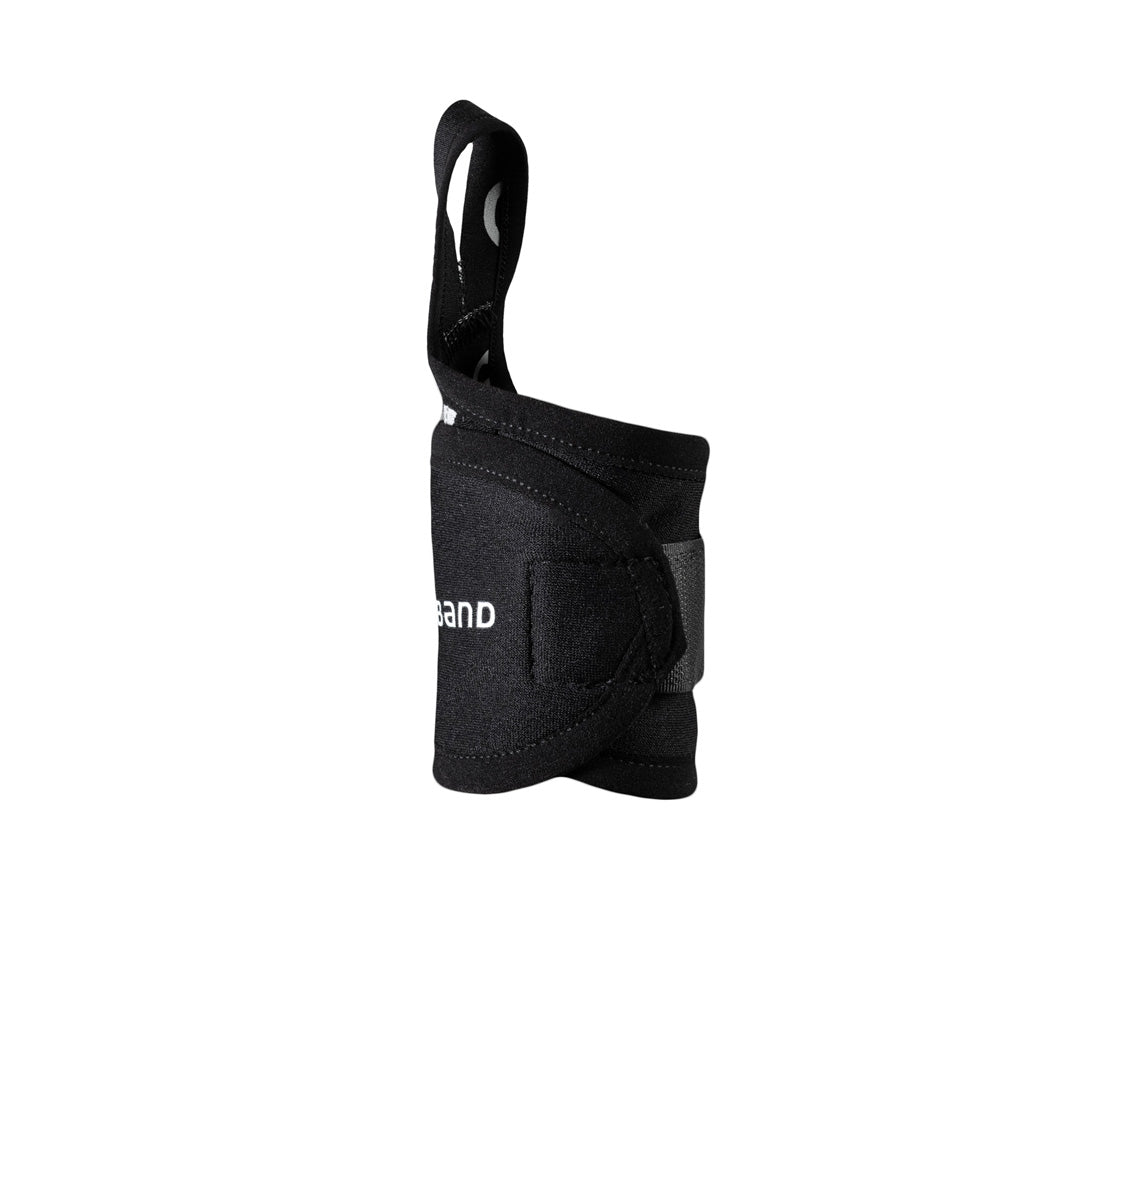 111206-01 Rehband QD Wrist & Thumb Support Black 1.5mm - Side